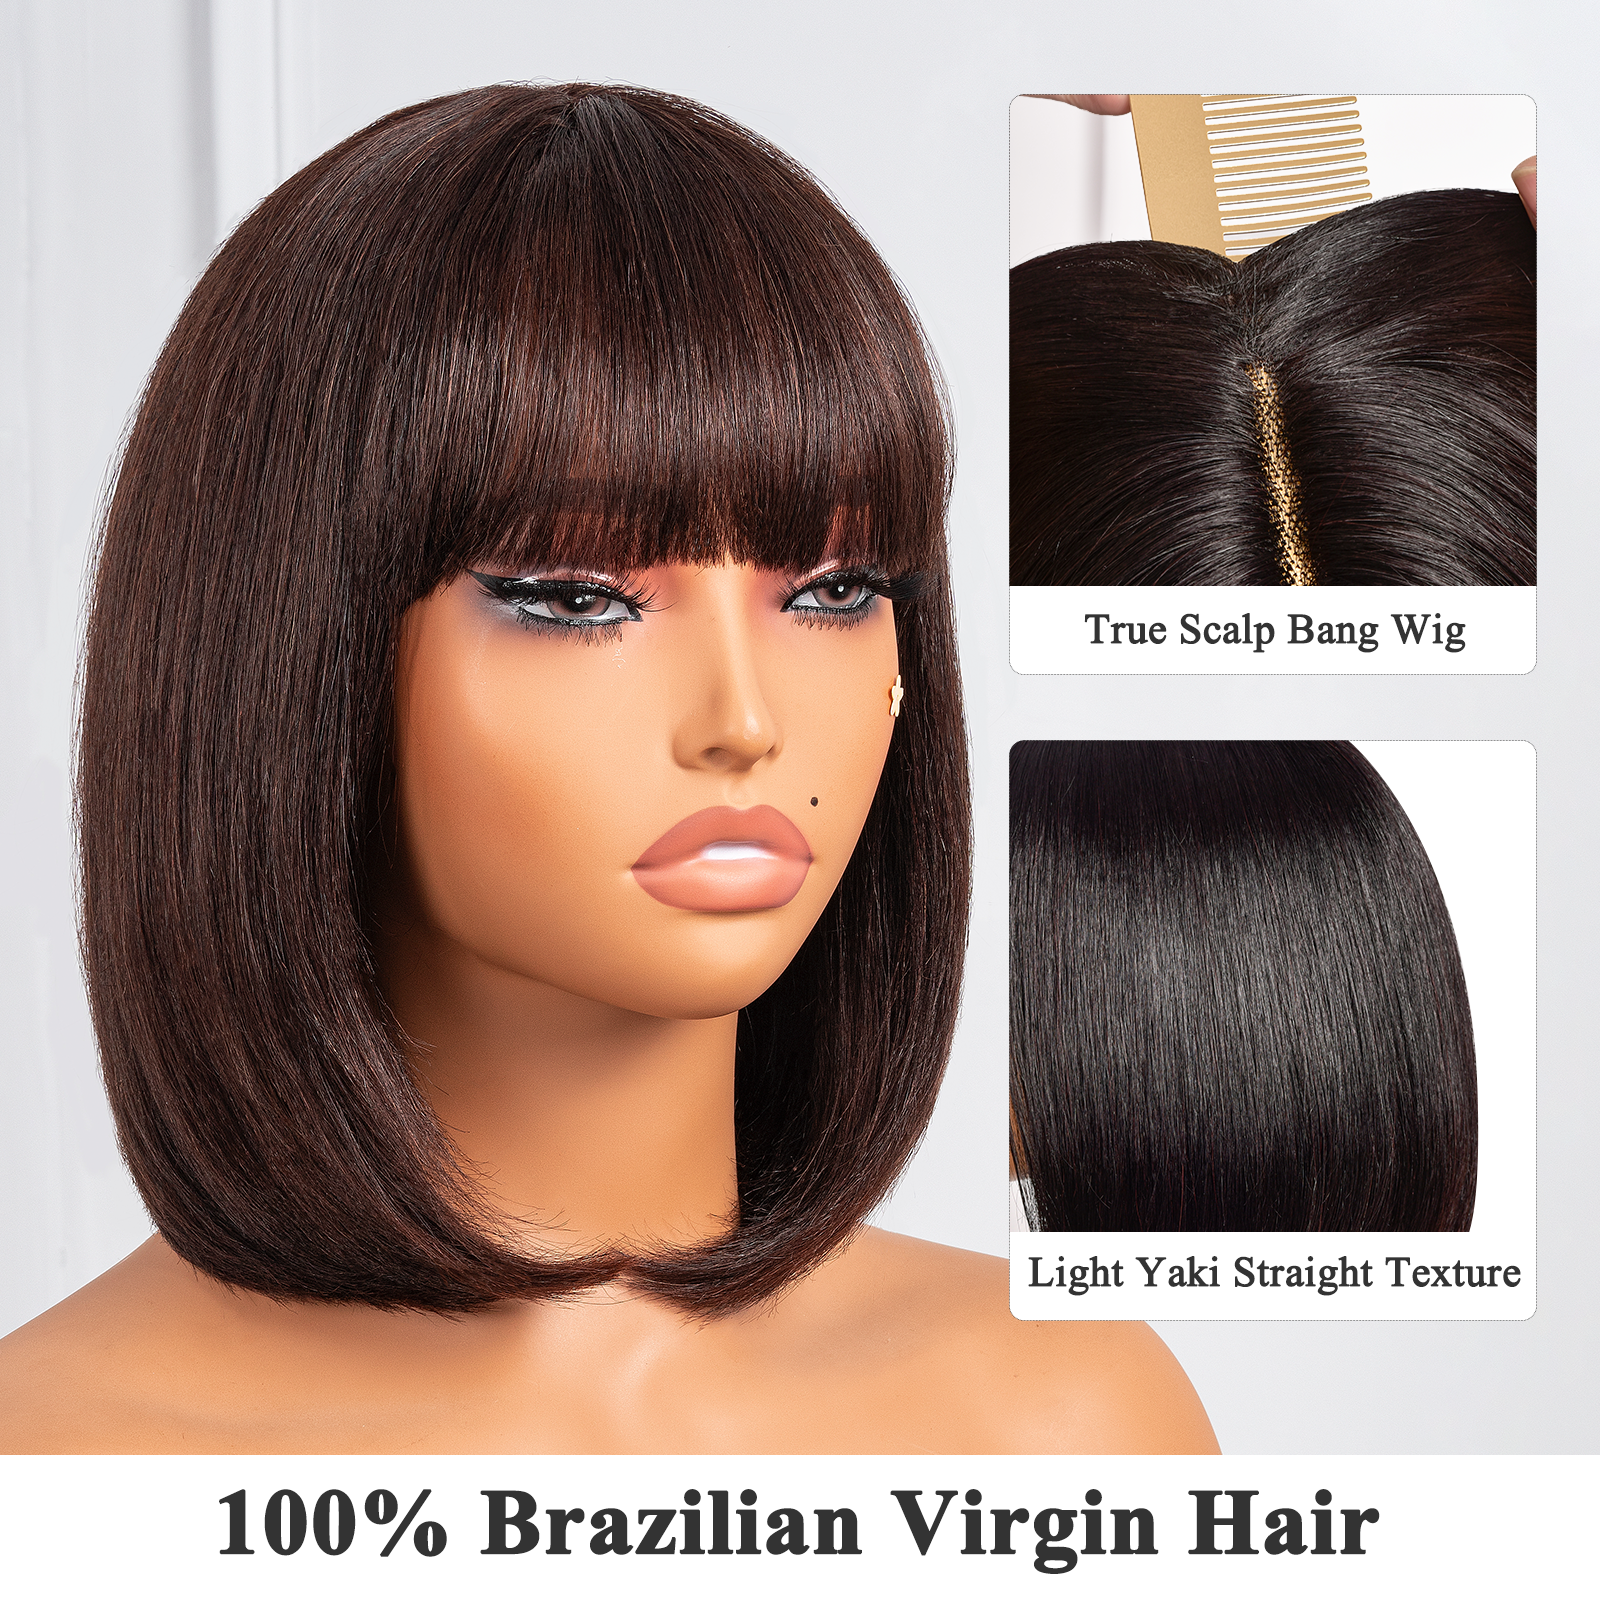 𝗖𝗮𝗽𝗿𝗶𝗰𝗼𝗿𝗻 | Toyotress U+ Human Hair Bob Wigs - 10 Inch Blunt Cut Short Black Bob Wigs With Bangs, Light Yaki Straight Realistic Look HD Invisible 13*4 T-Part long Lace Glueless 100% Brazilian Virgin Hair Wigs(LF0922H)